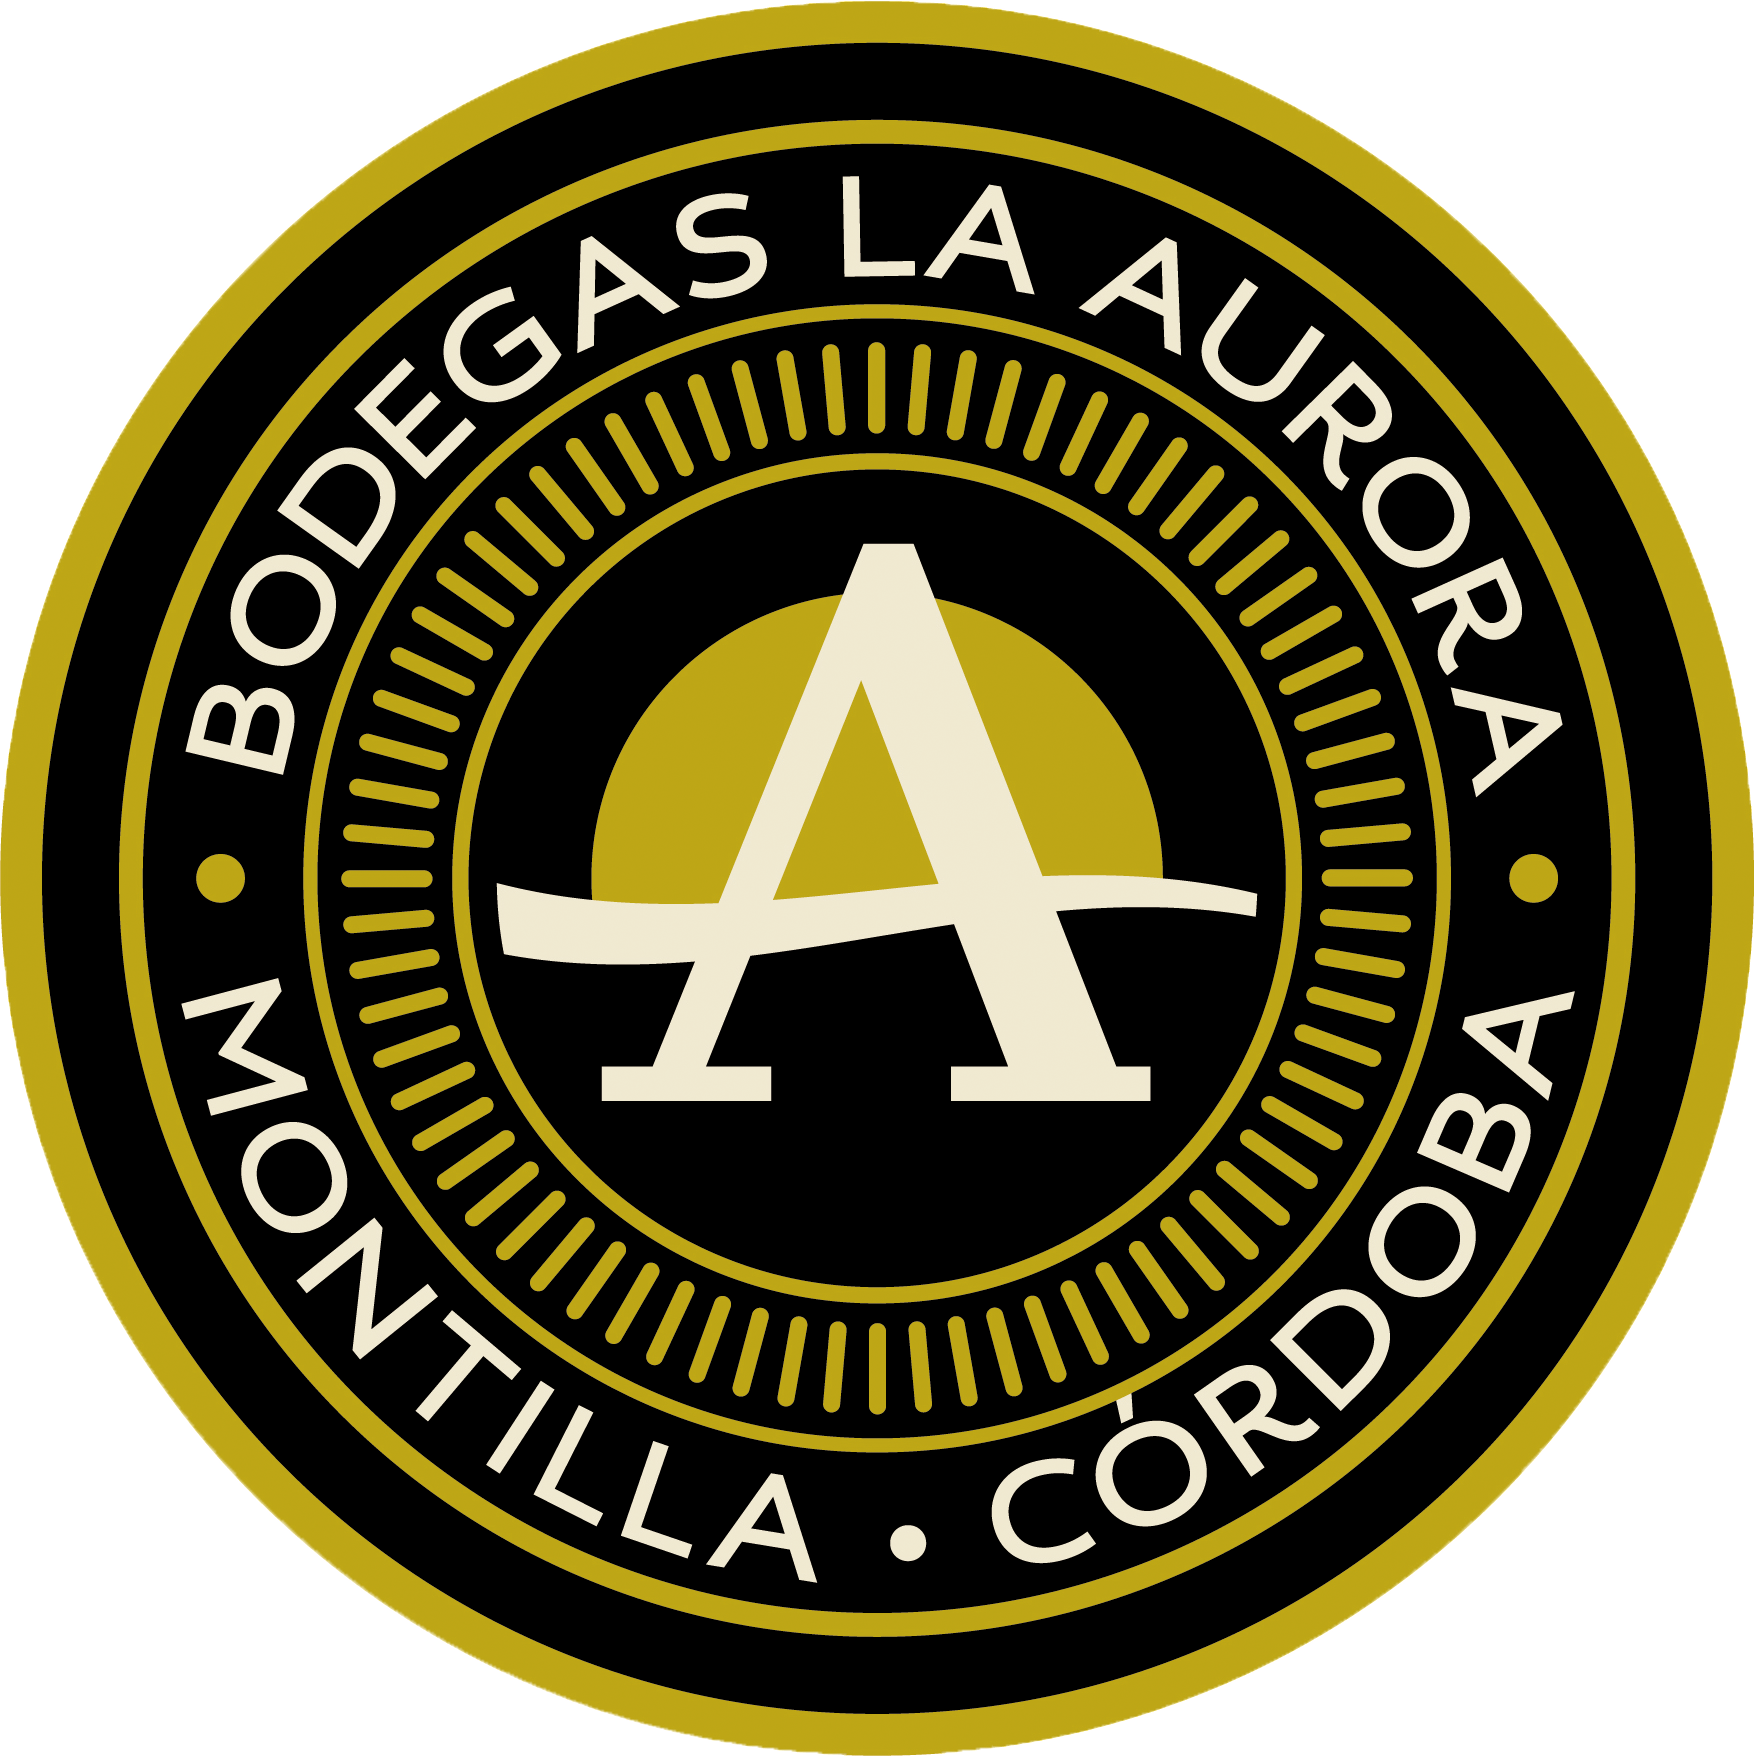 Bodegas La Aurora logo